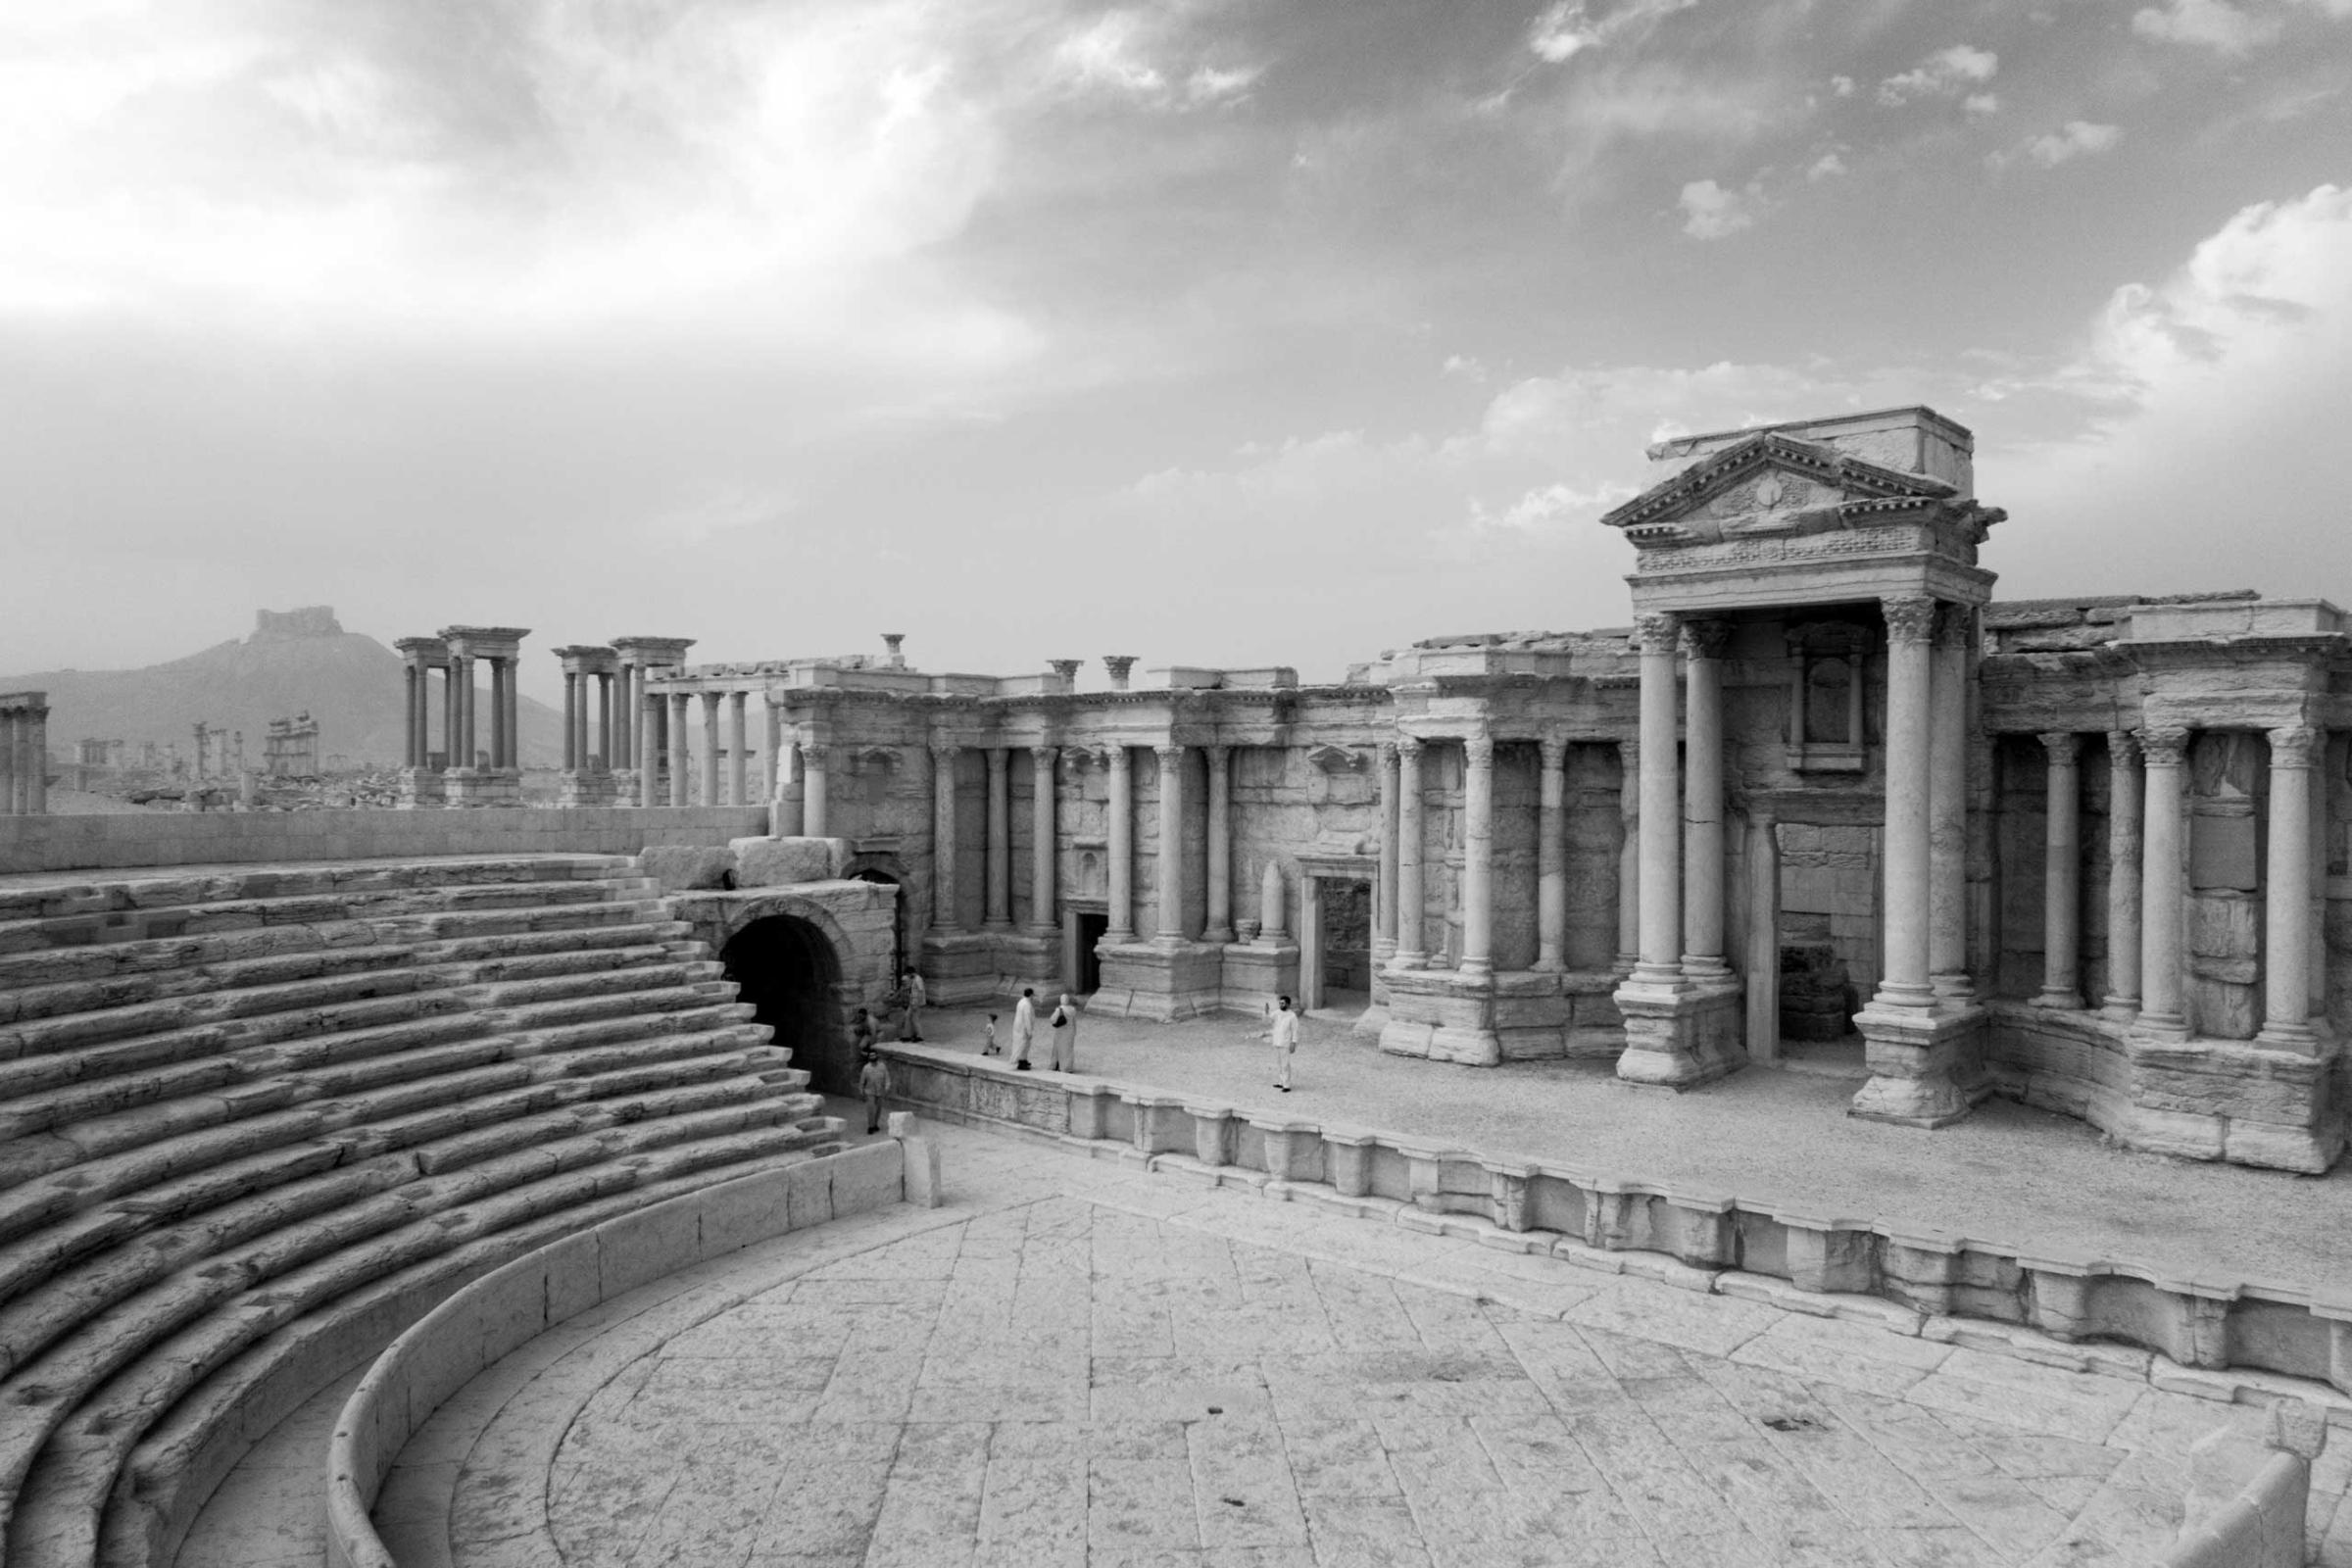 The grand Roman amphitheater in Palmyra.